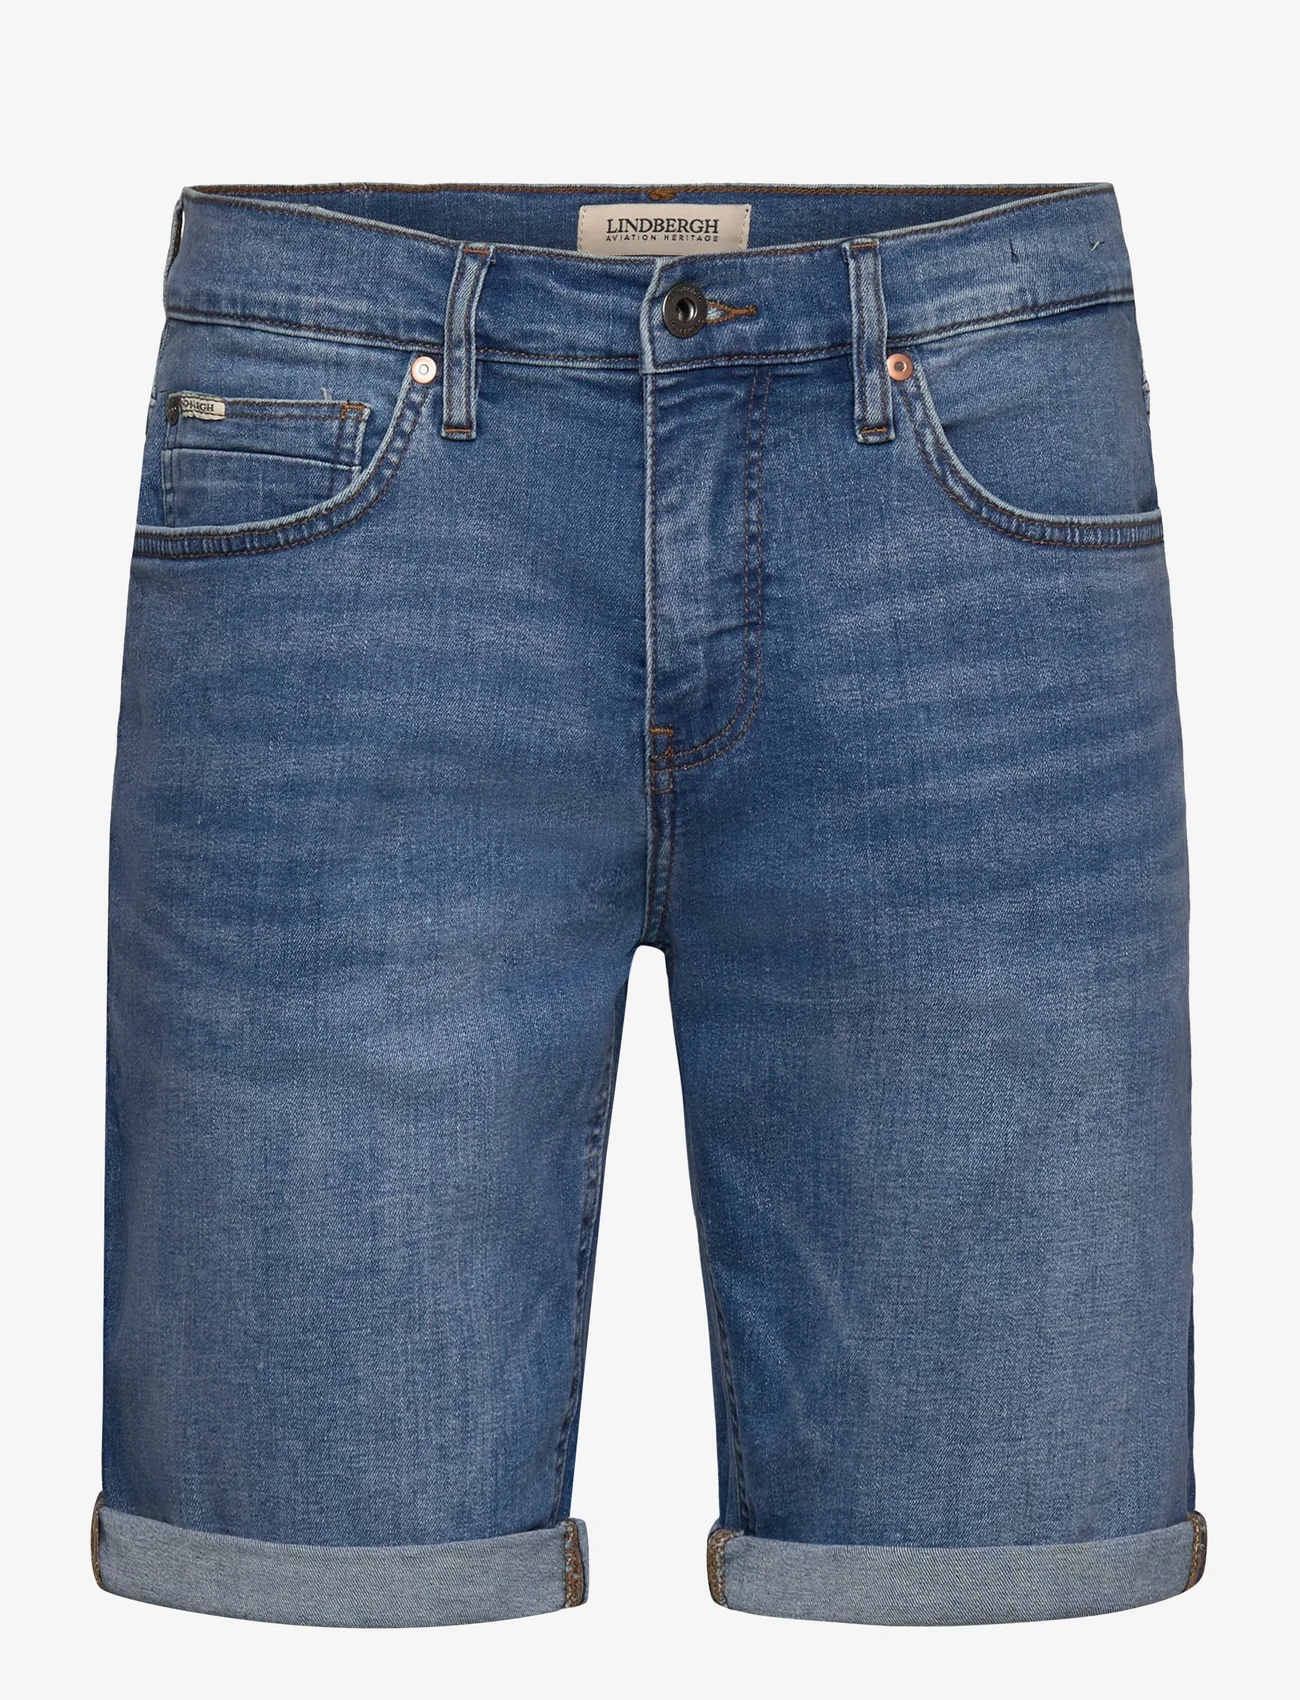 Lindbergh - Superflex denim shorts - jeansshorts - pale blue - 0